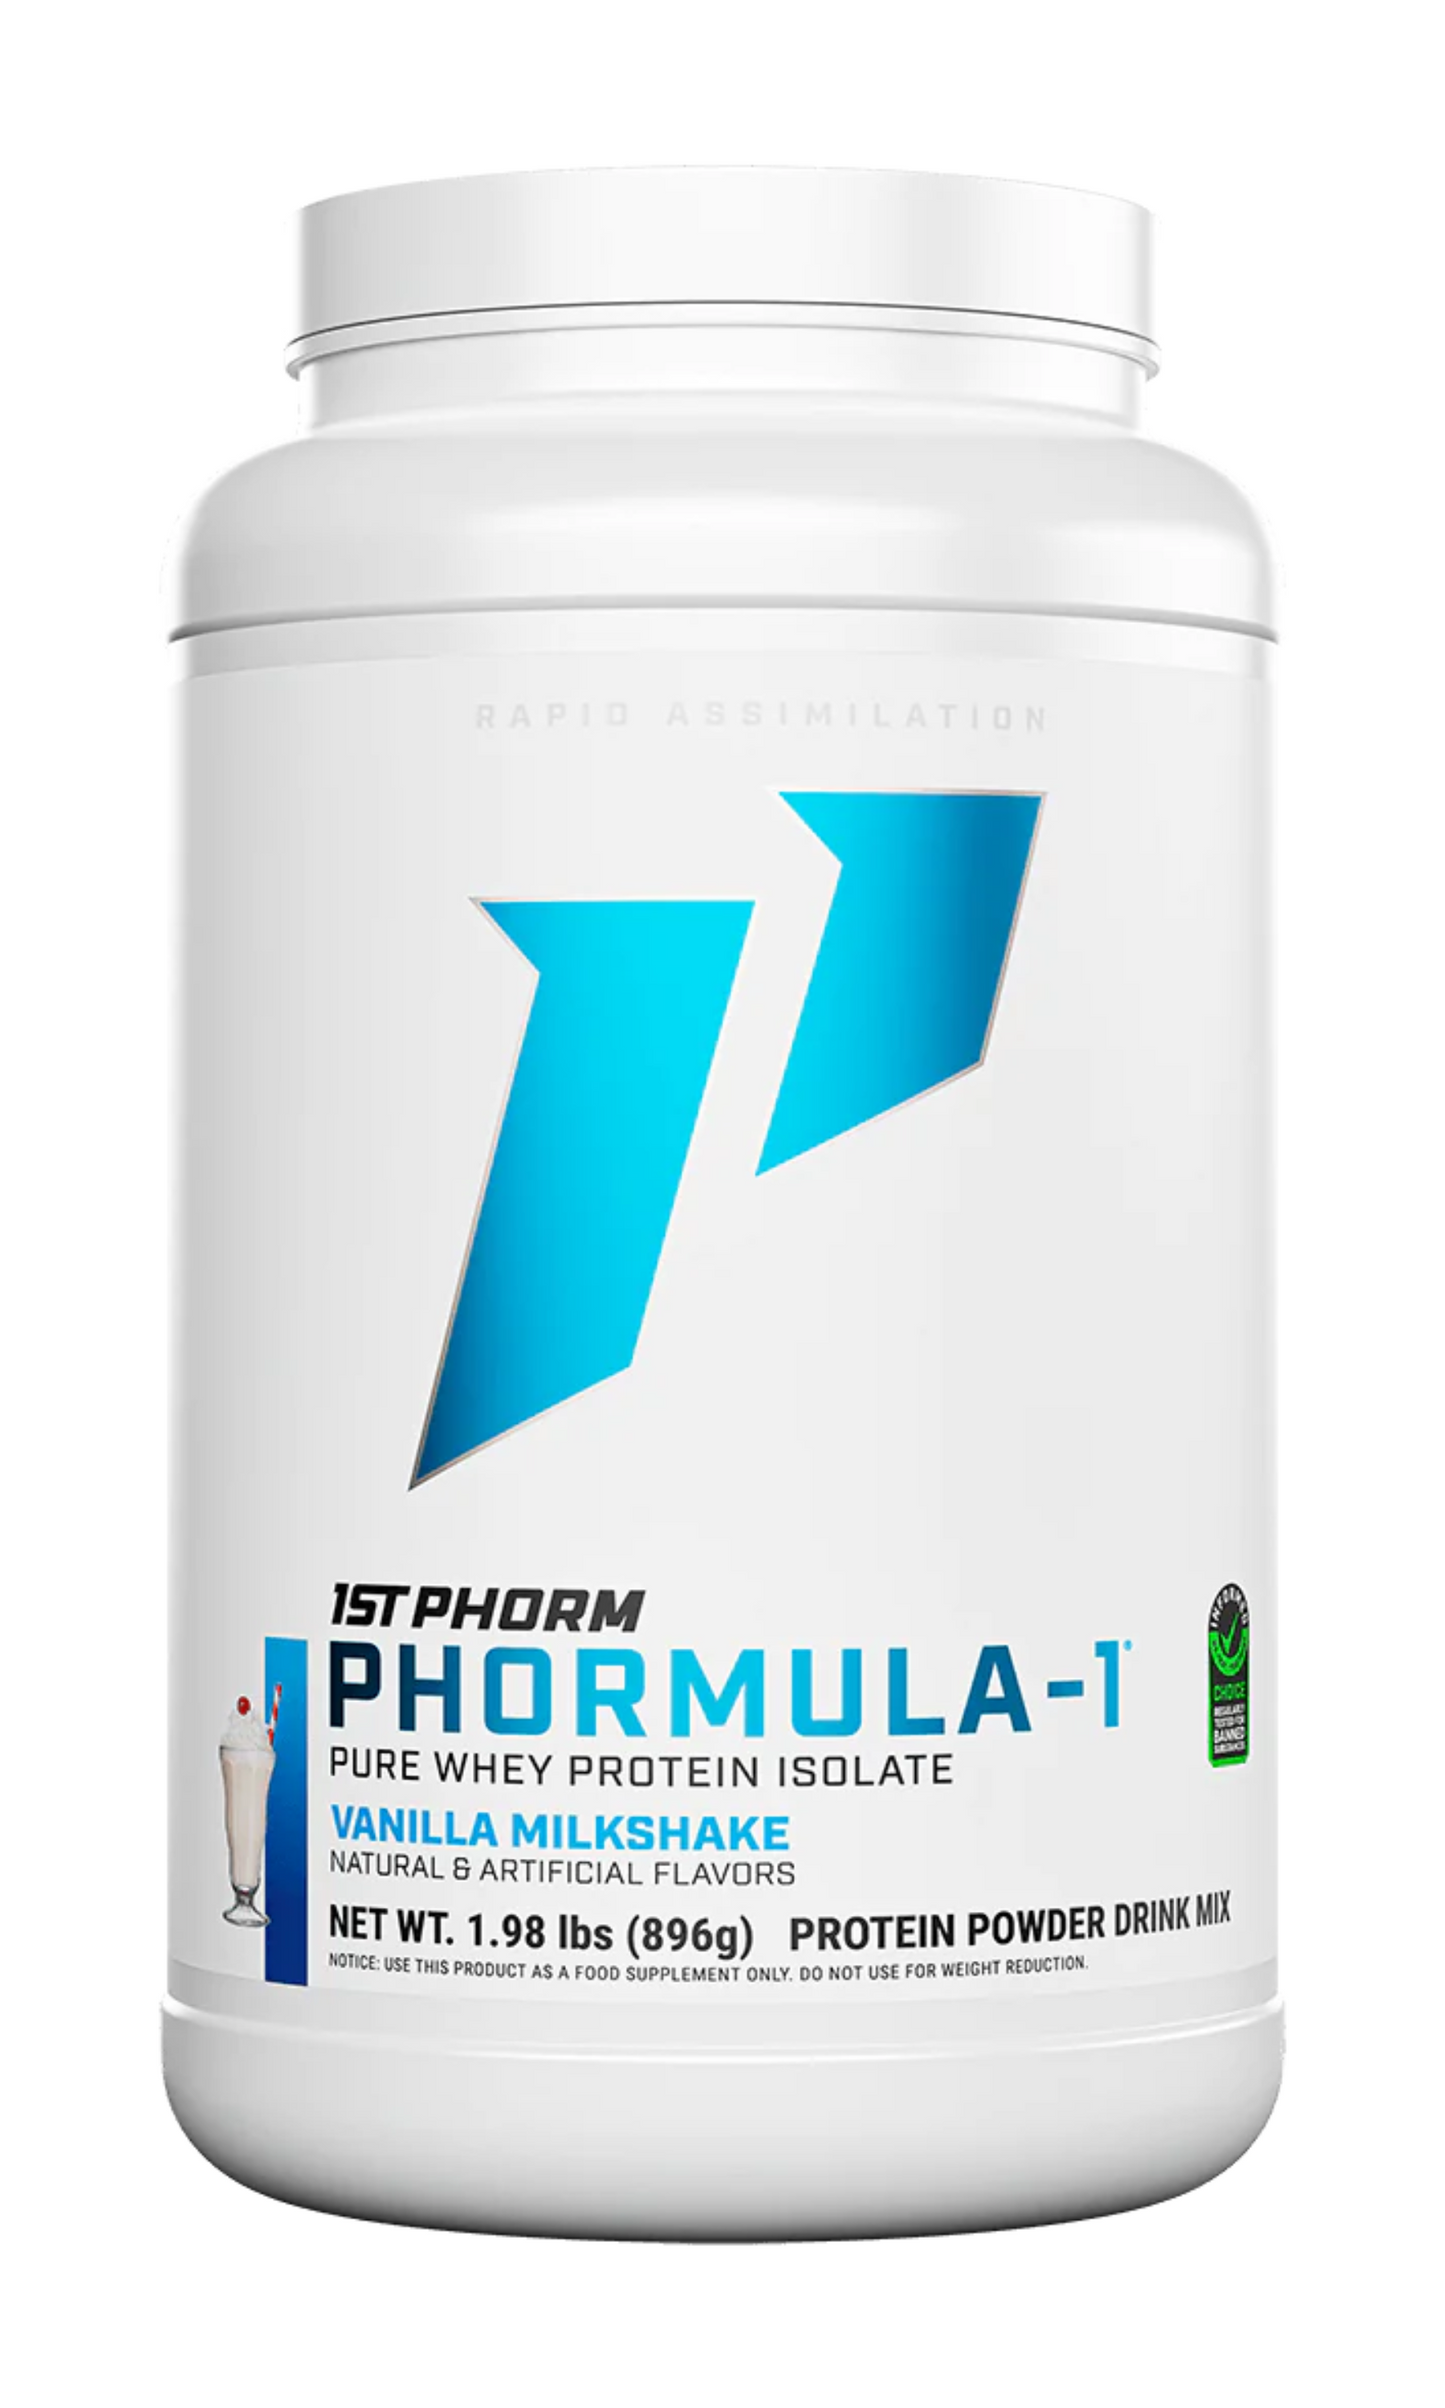 Phormula-1 Protein Powder (Vanilla Milkshake)